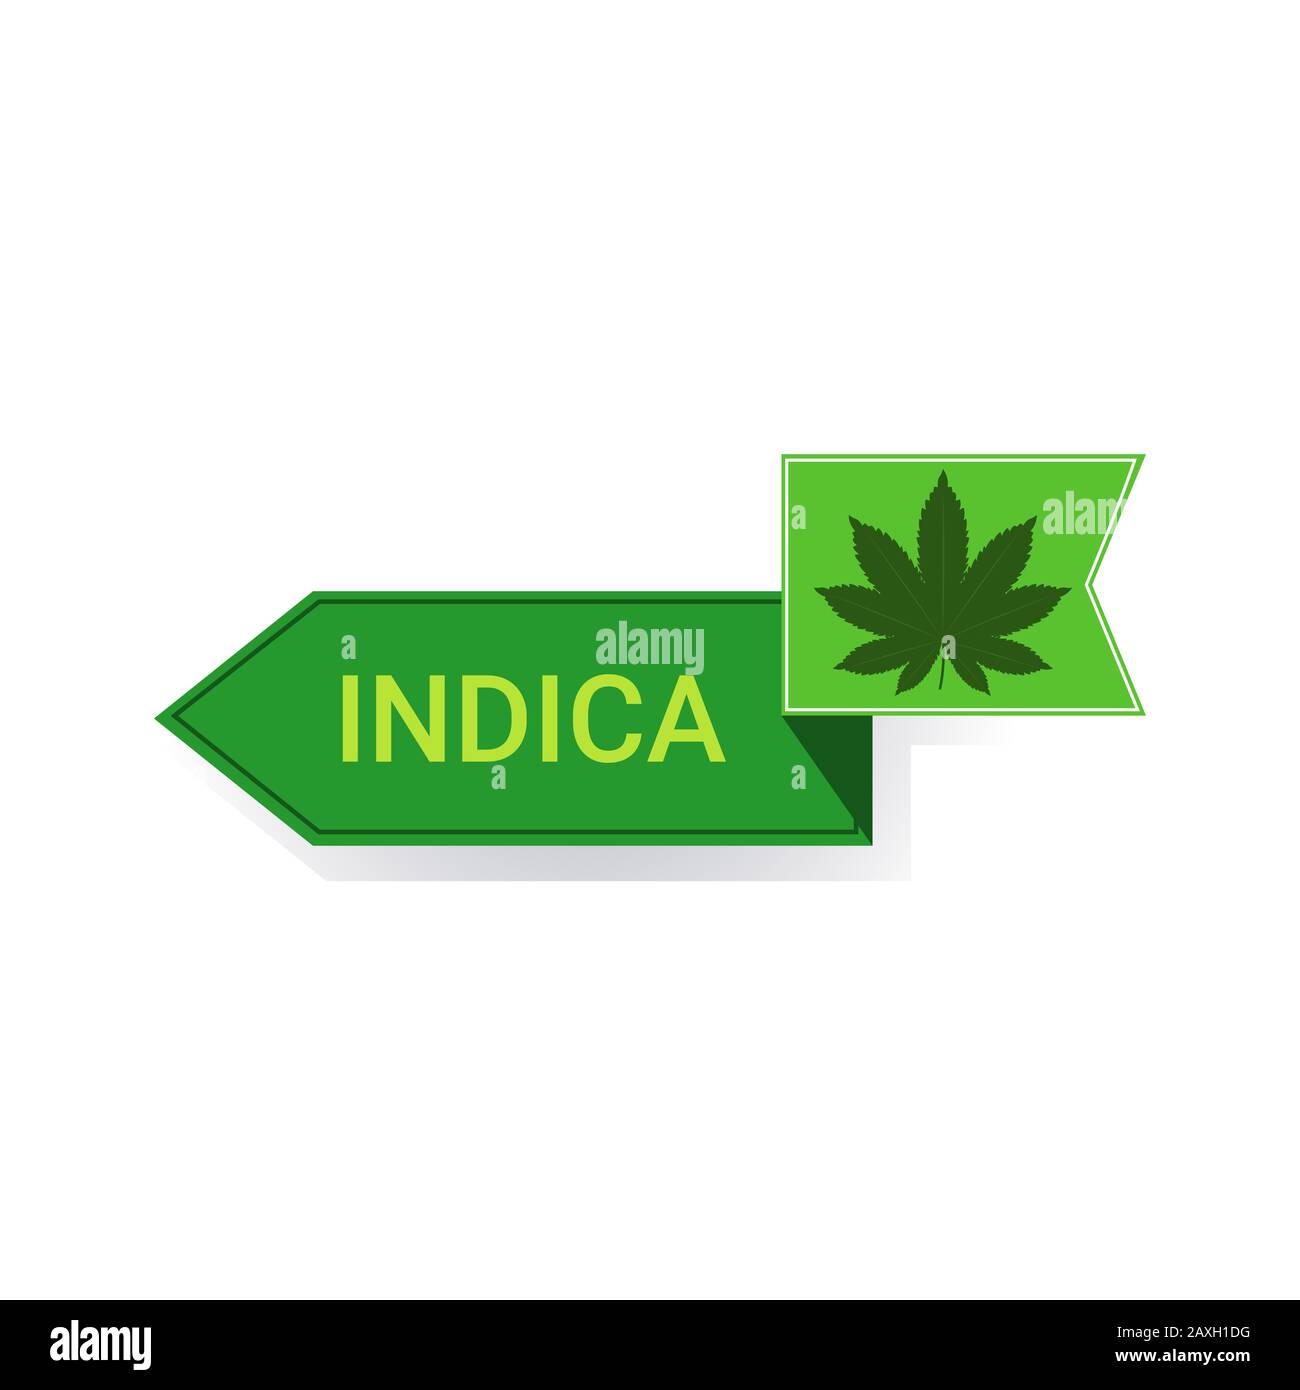 Marihuana-Blattsticker cbd-Öllabel Hanf ganja Cannabis Unkraut Badge Medical Pharmaceutical Industry Business Company Logo Design Flat Vector Illustration Stock Vektor